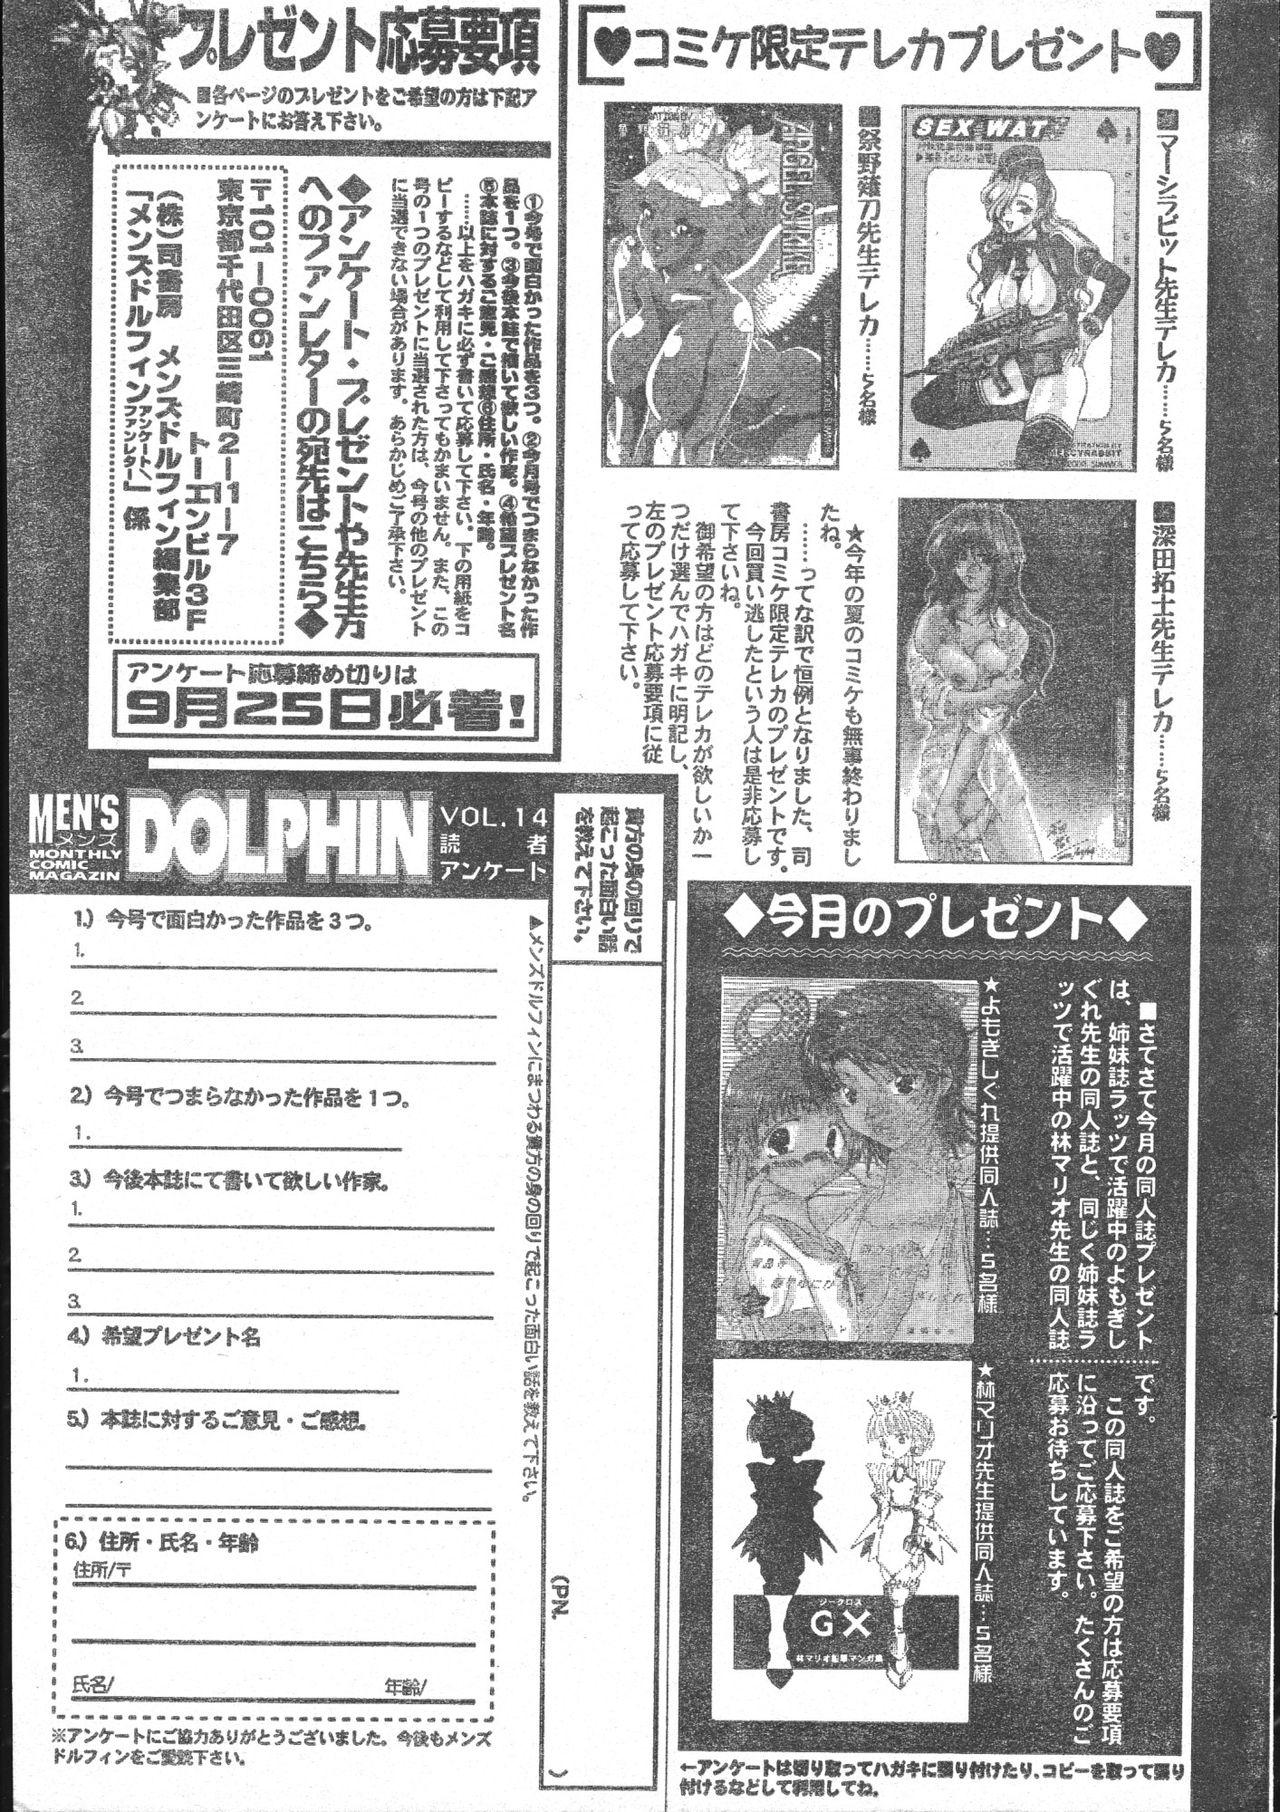 Men's Dolphin 2000-10-01 Vol.14 200